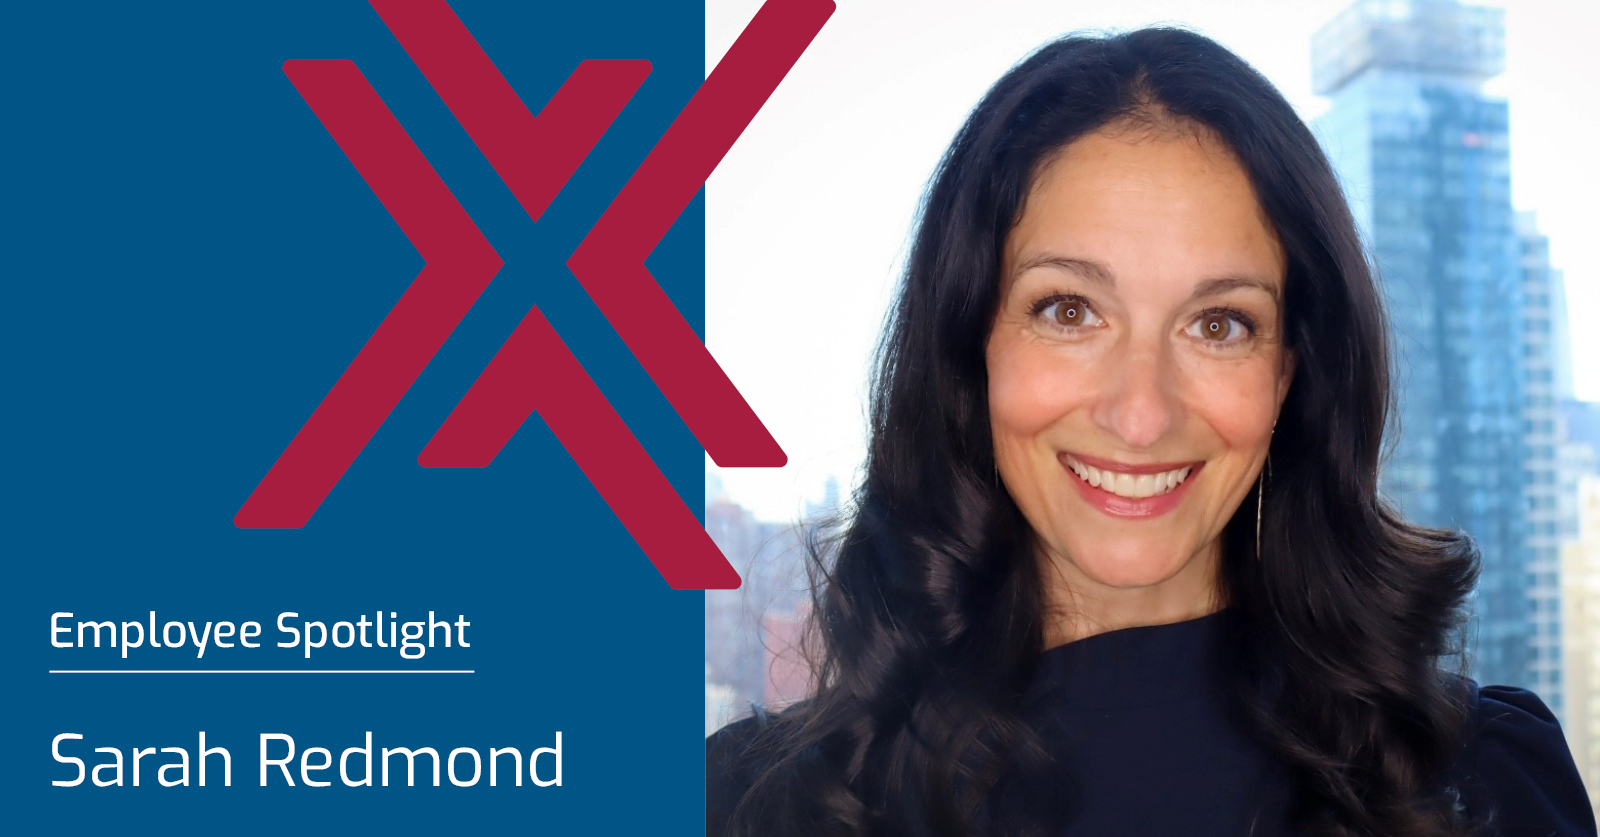 Employee Spotlight: Sarah Redmond, Executive Assistant, New York 